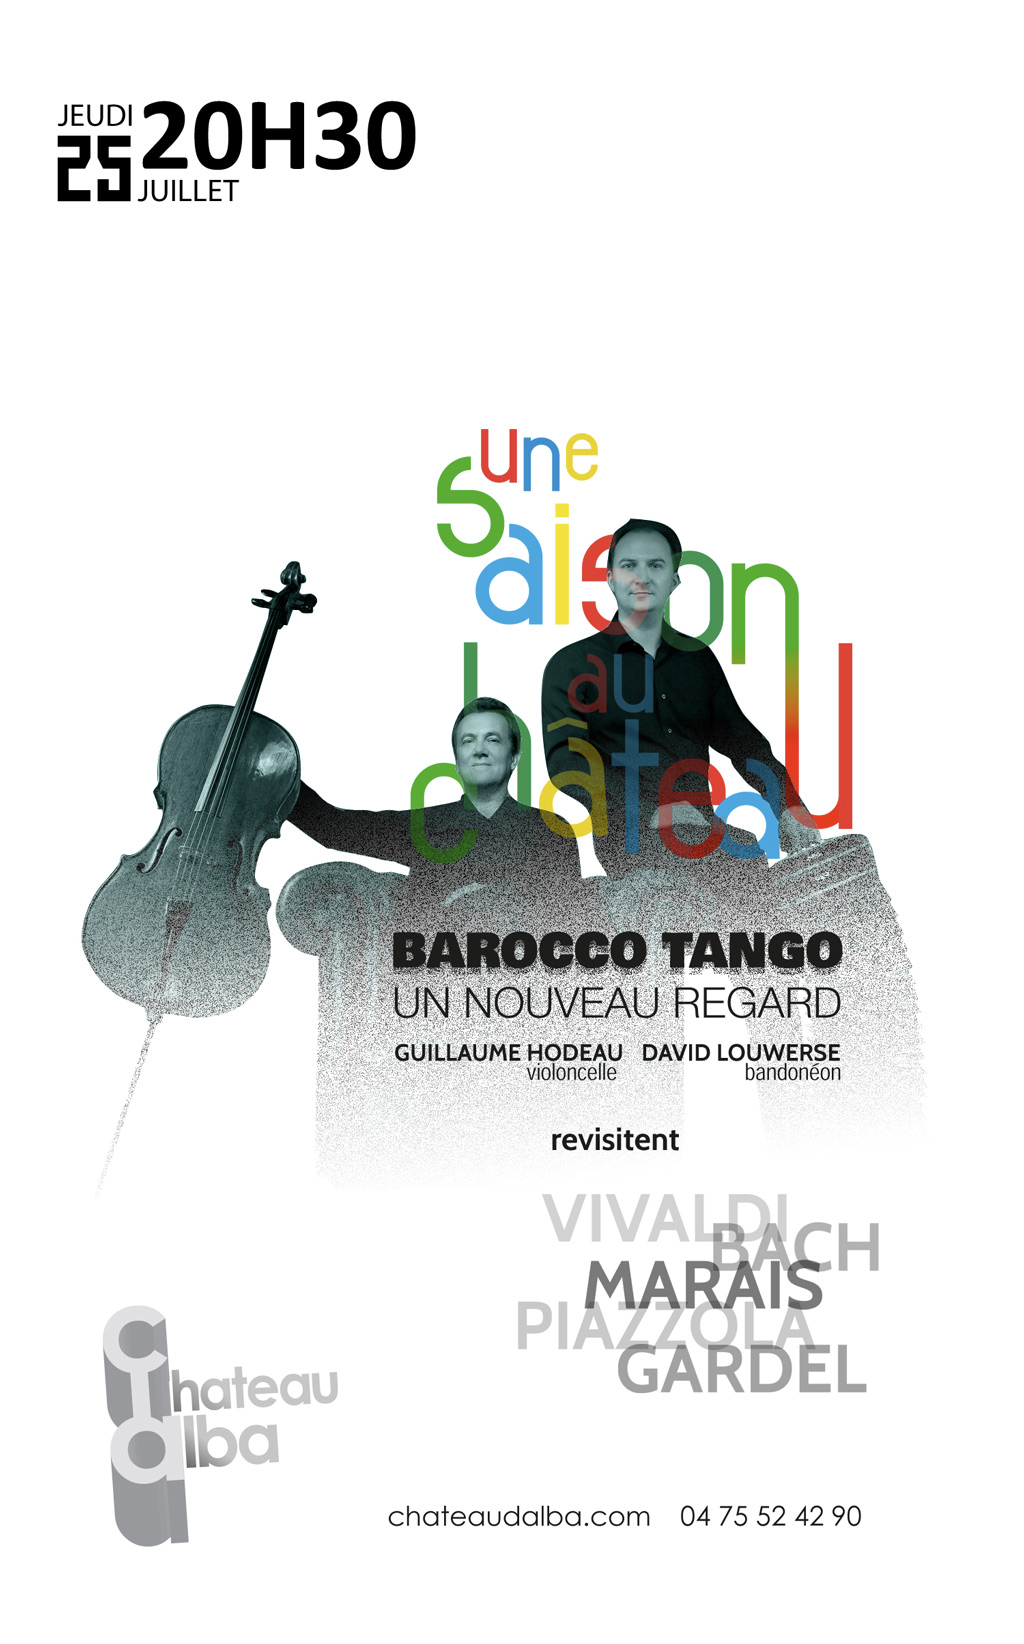 Barroco tango